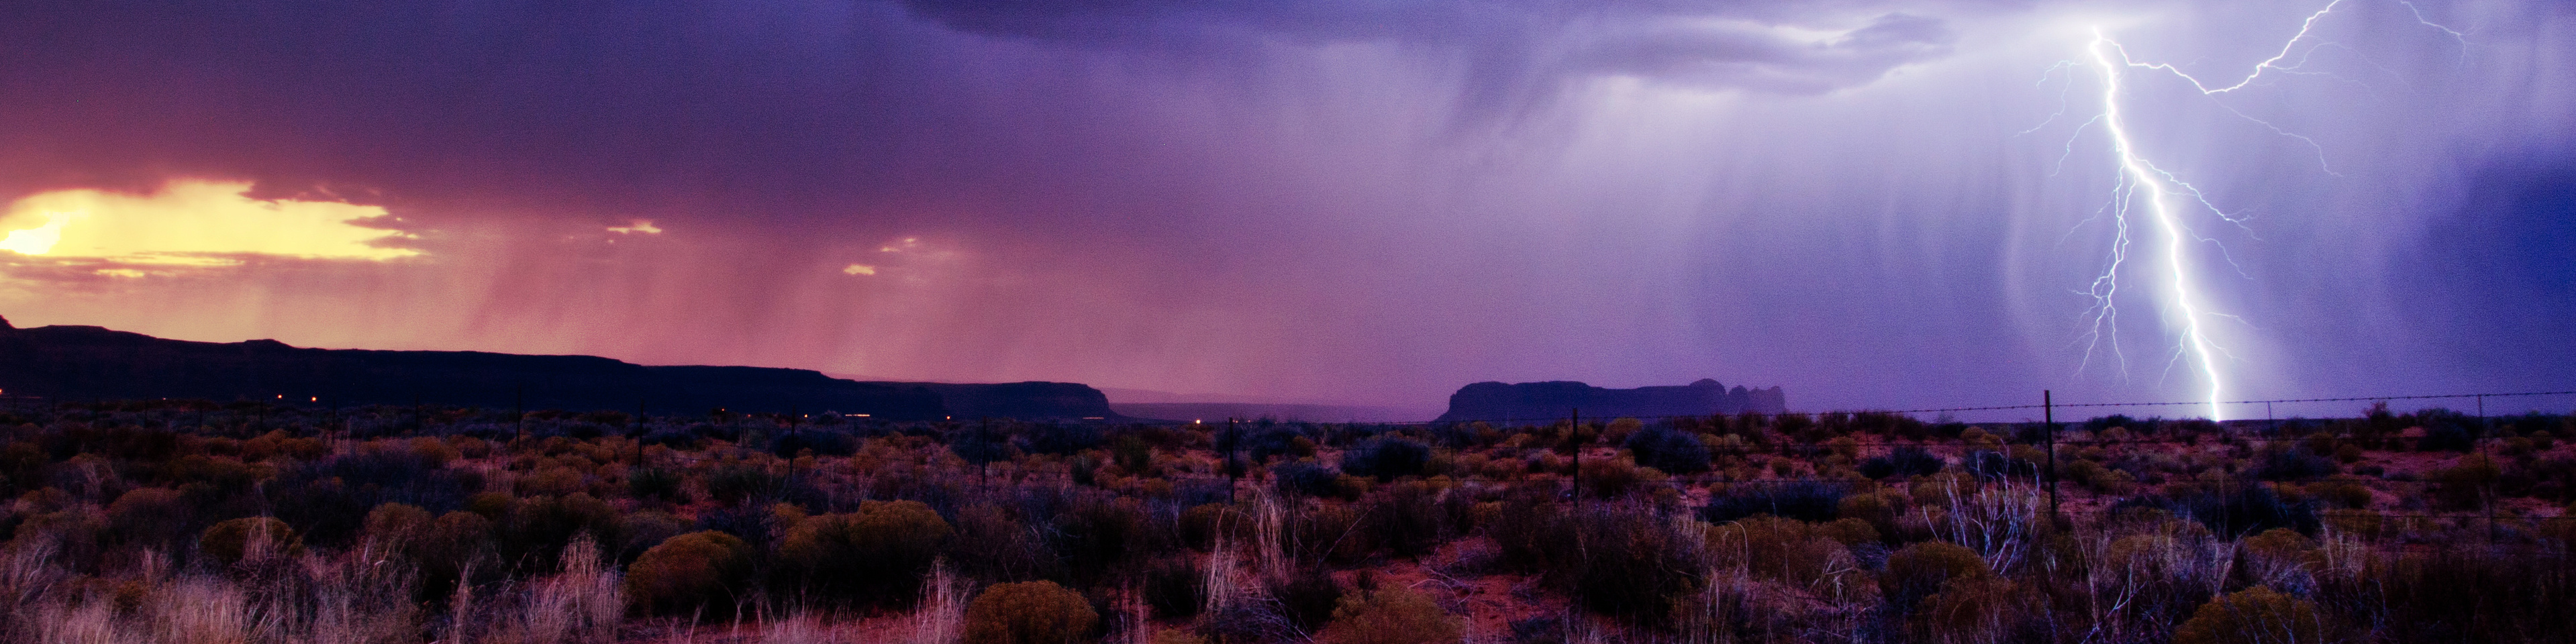 Storm in desert